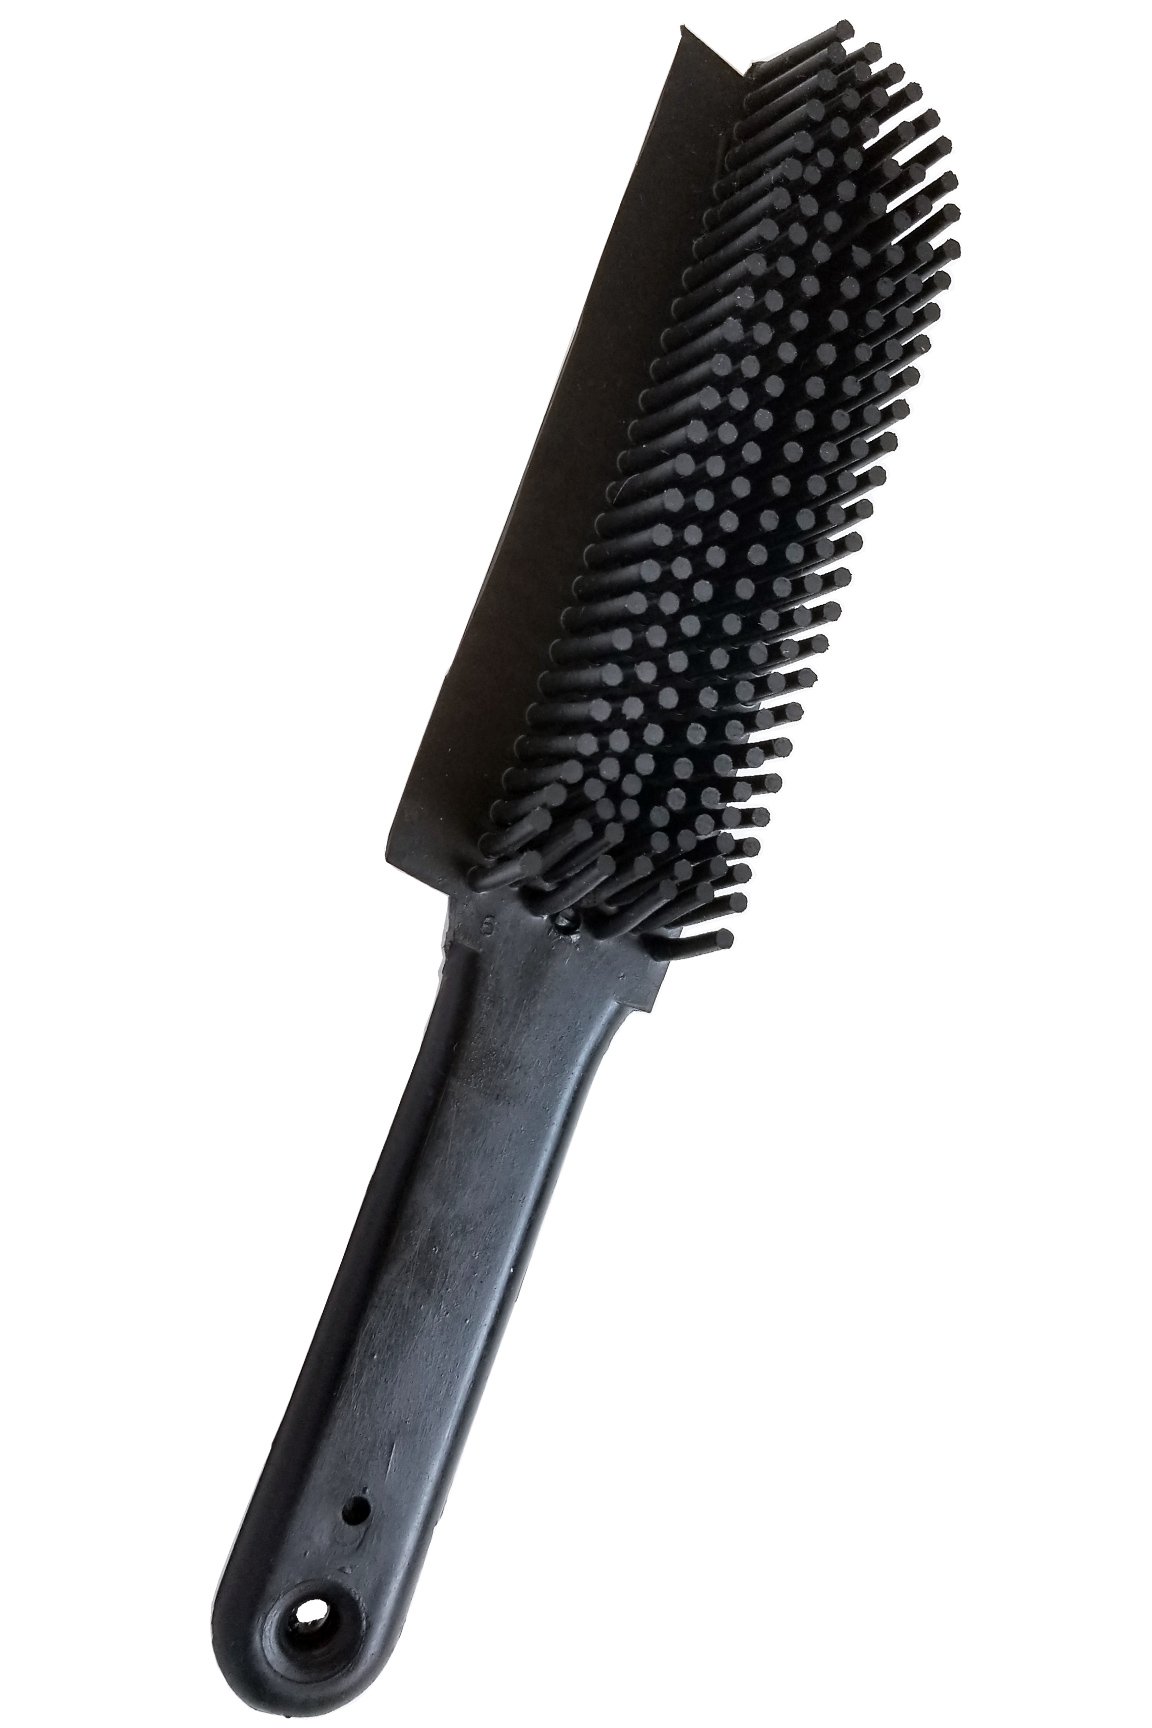 Sweepa Rubber Brush